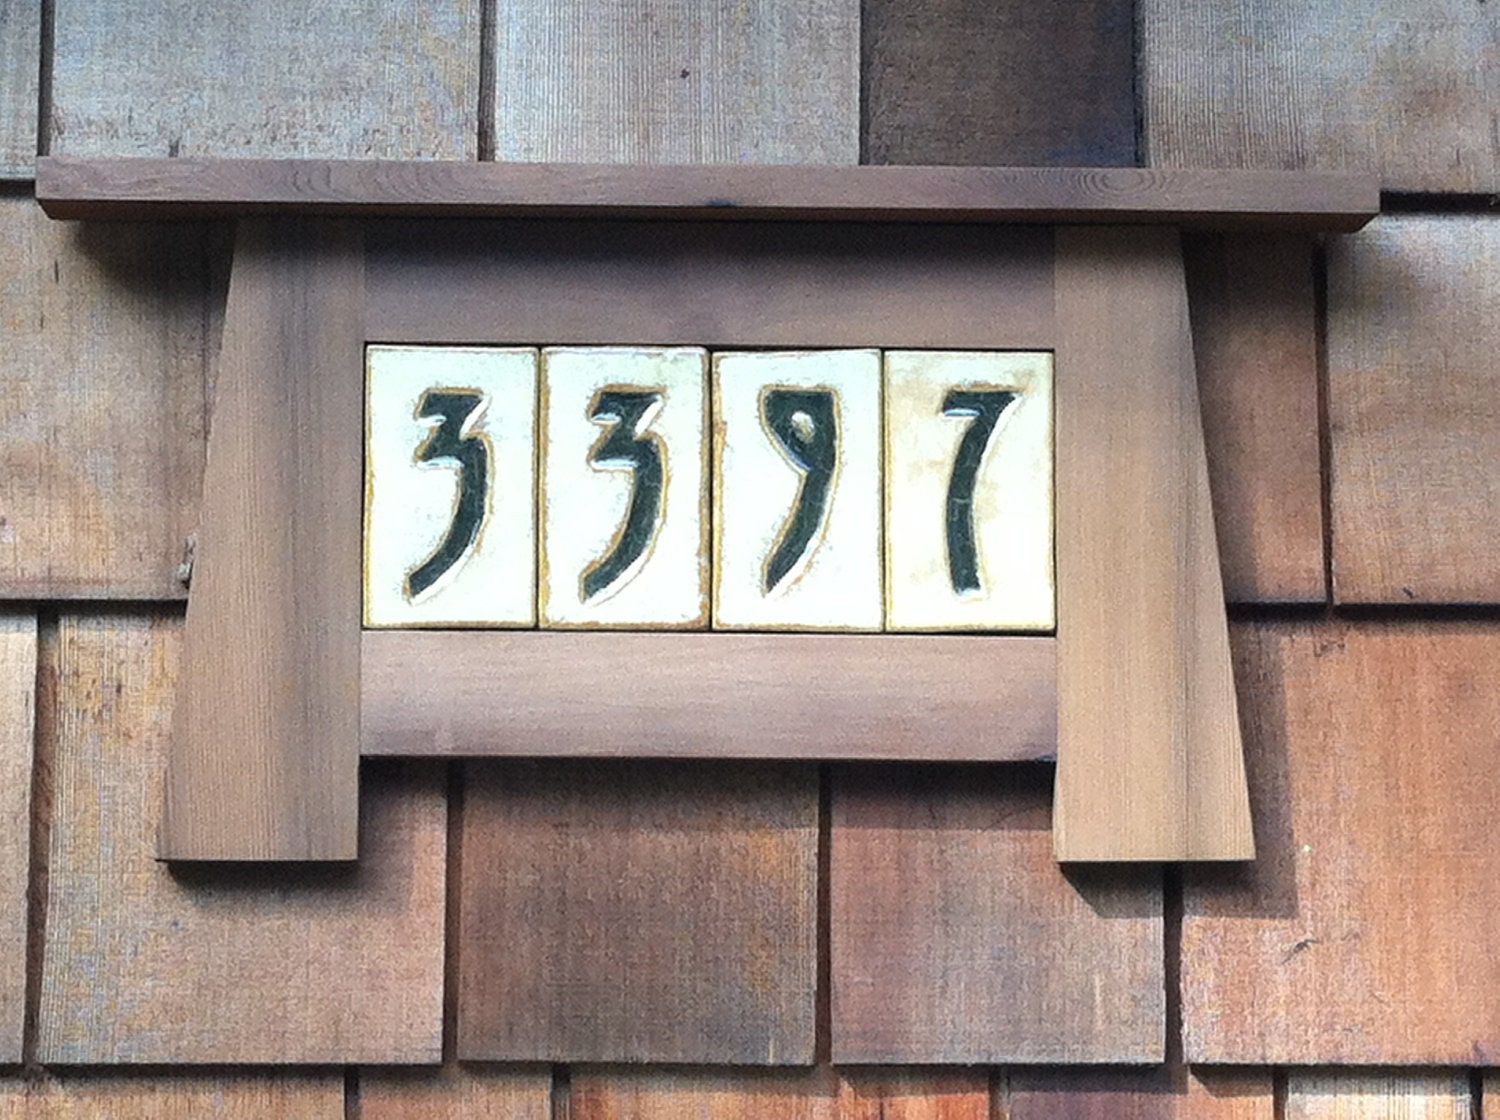 craftsman house numbers